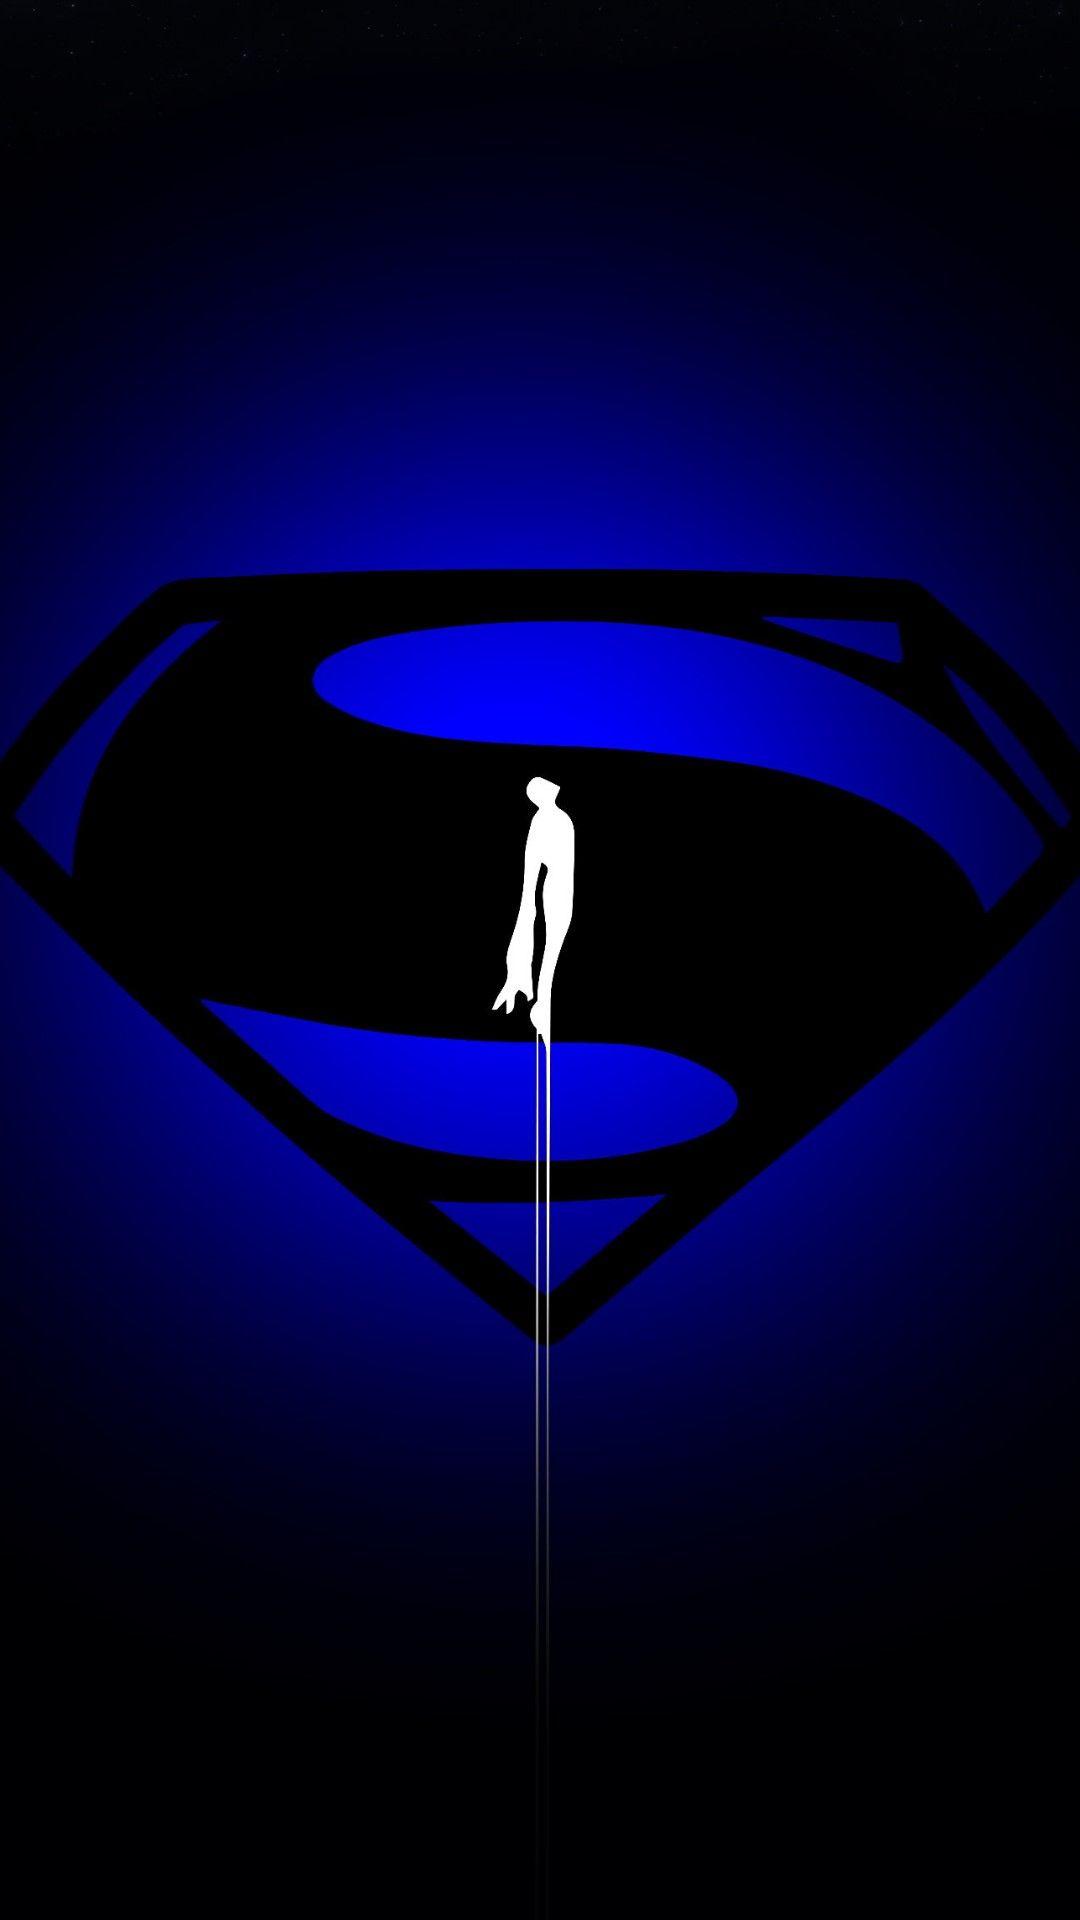 B L U E. Superman artwork, Superman